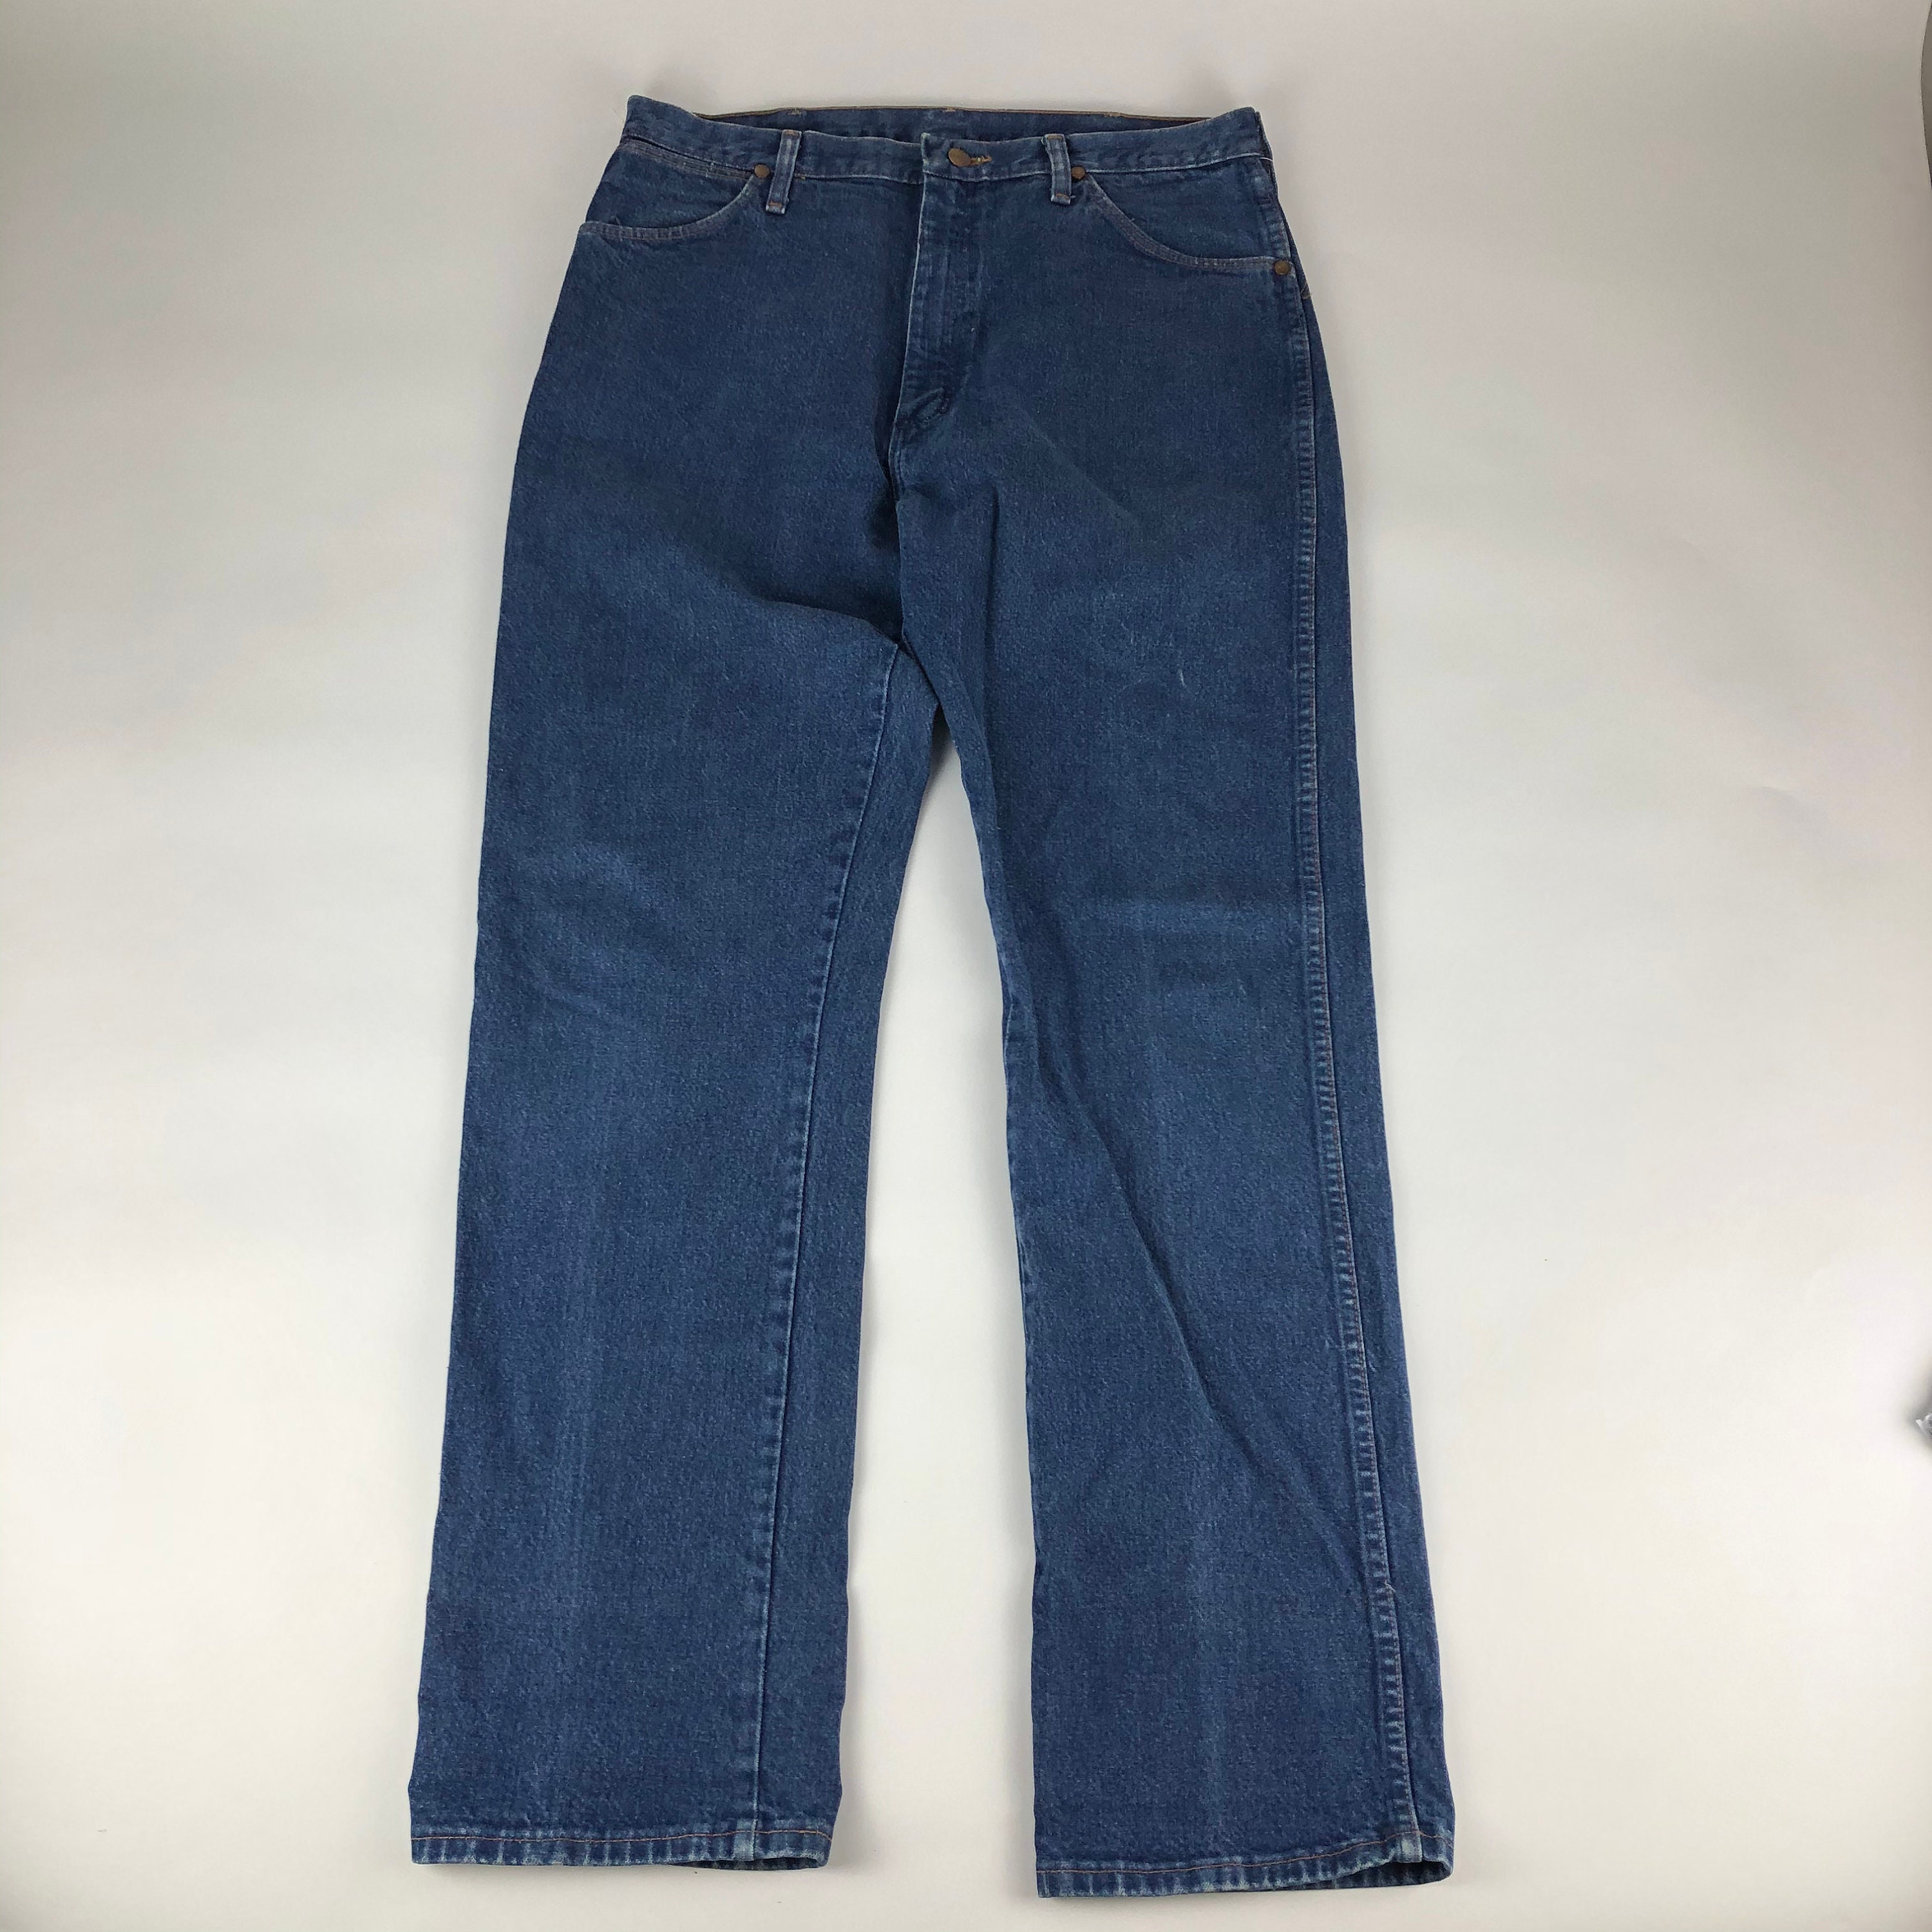 1980s/1990s Wrangler Jeans Made in USA 34x32.5 | Etsy